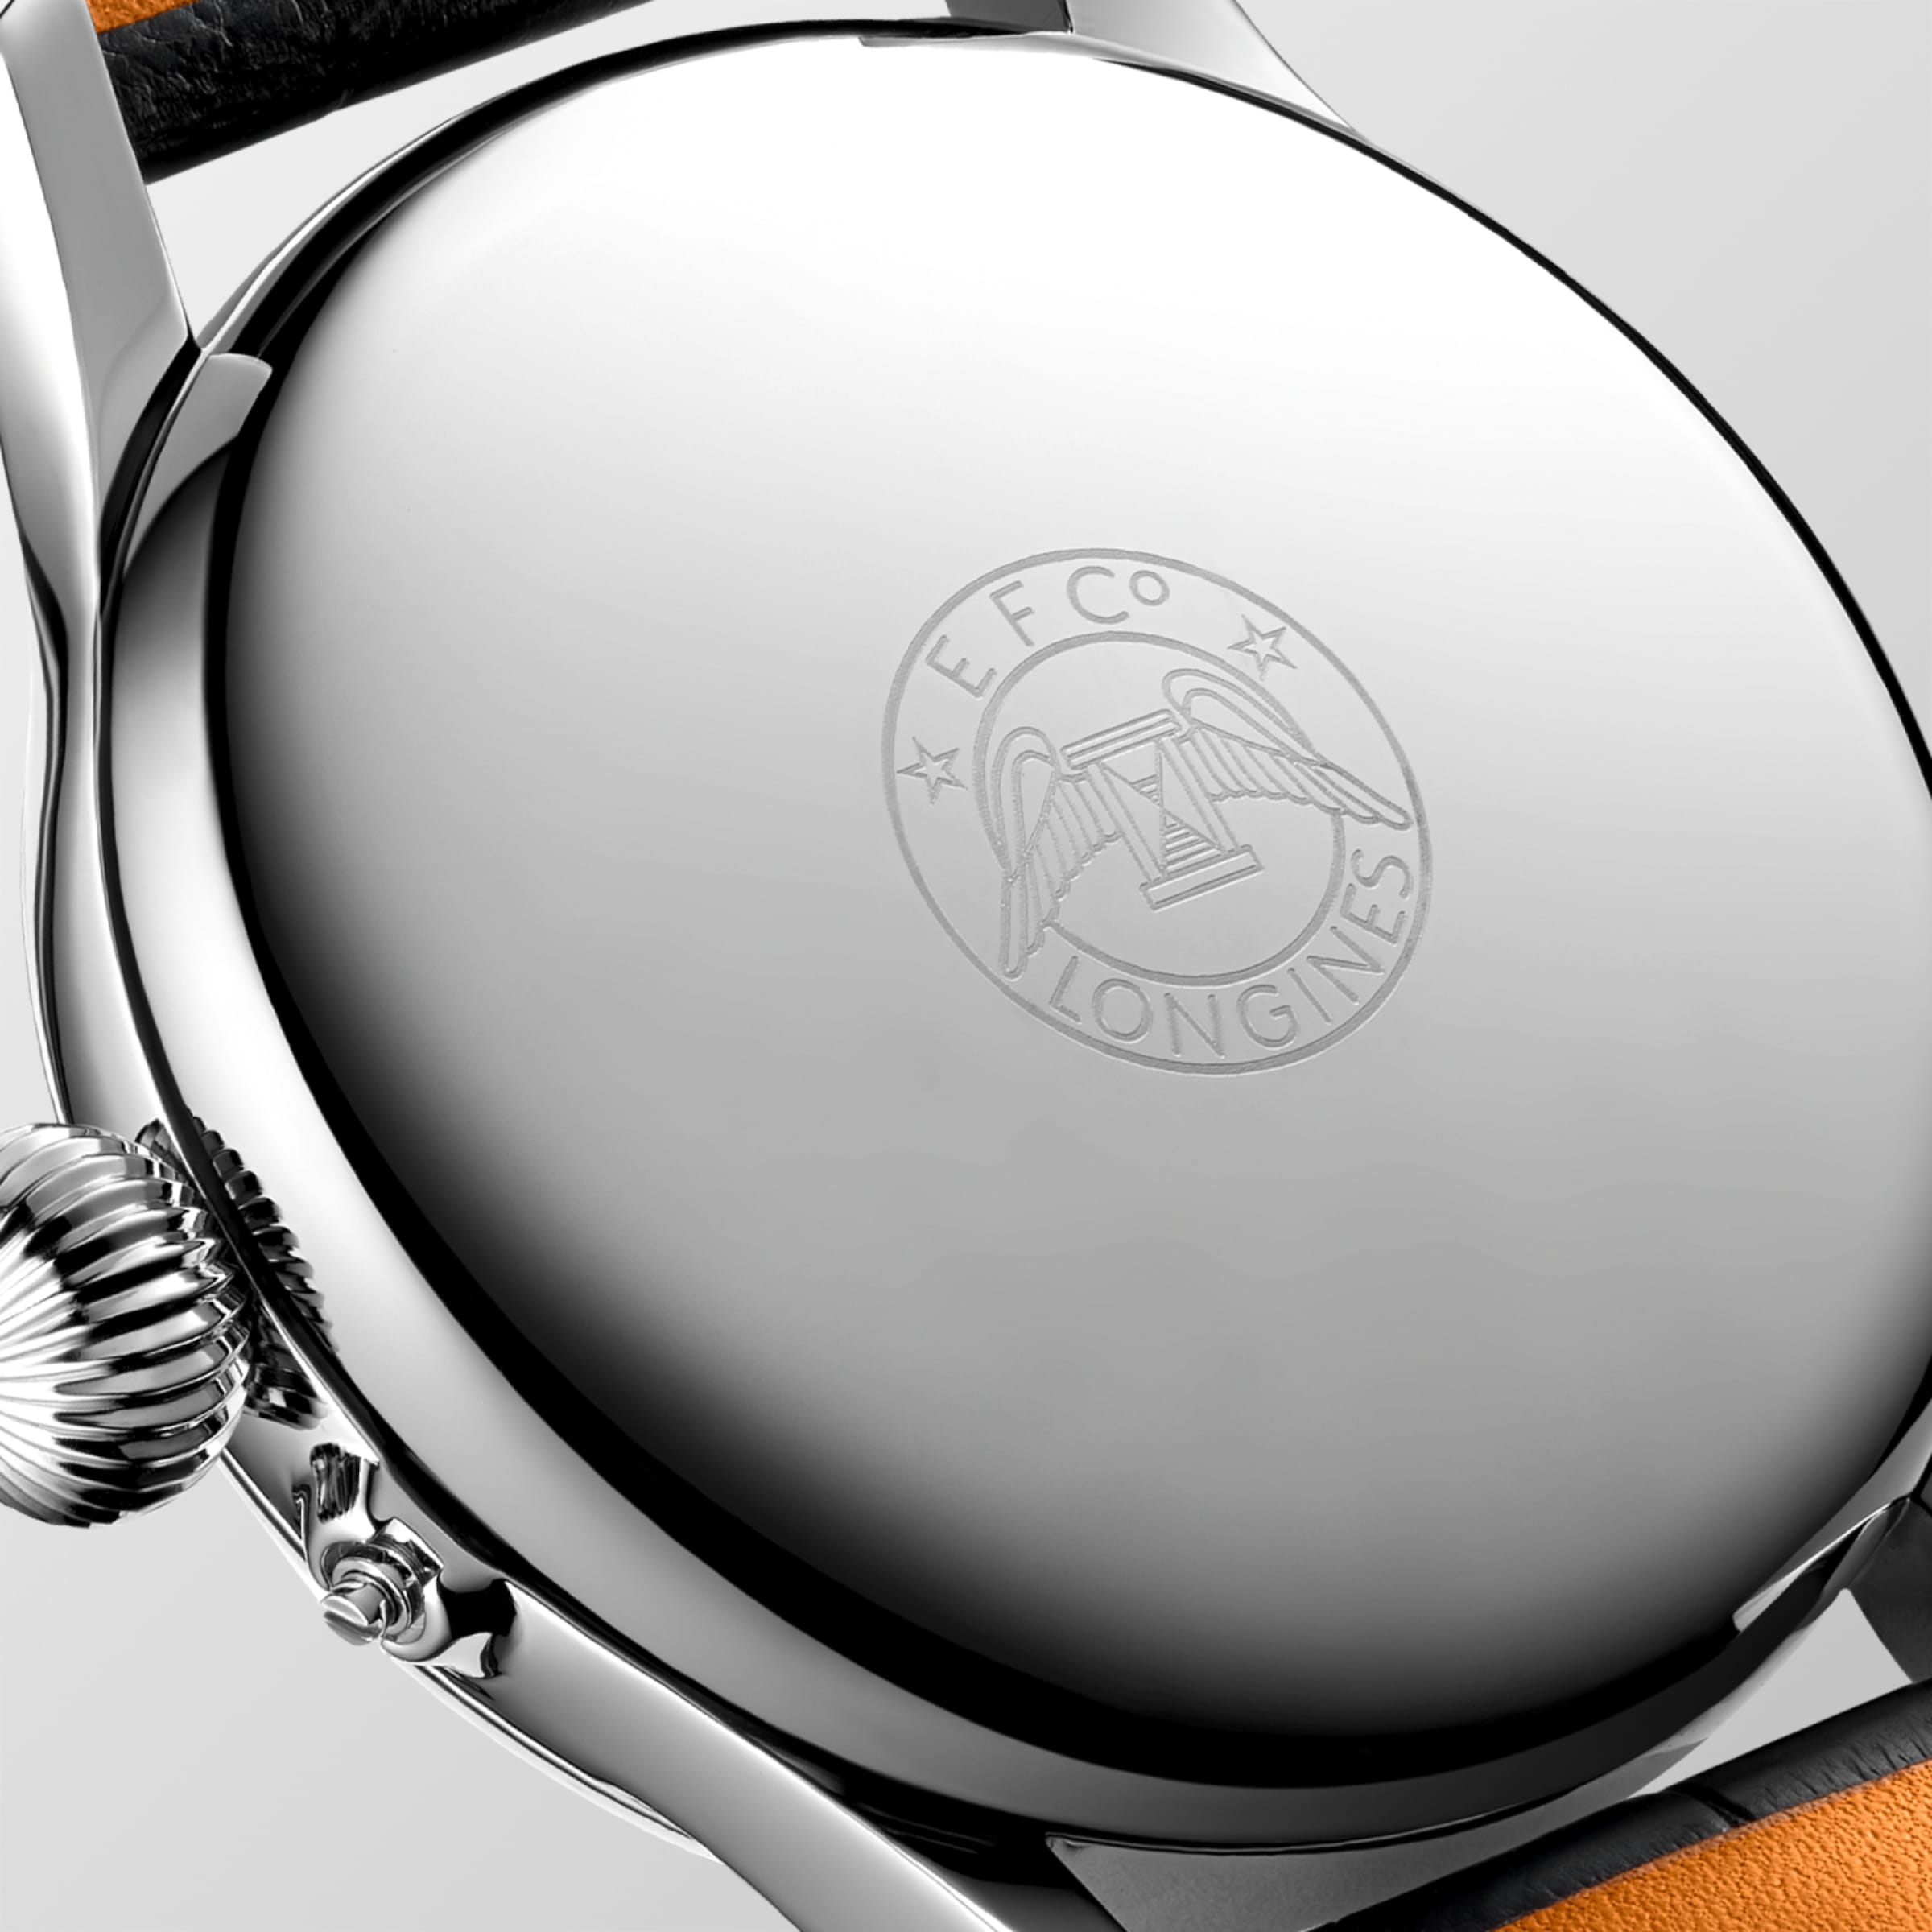 Longines TWENTY-FOUR HOURS Automatic Stainless steel Watch - L2.751.4.53.4